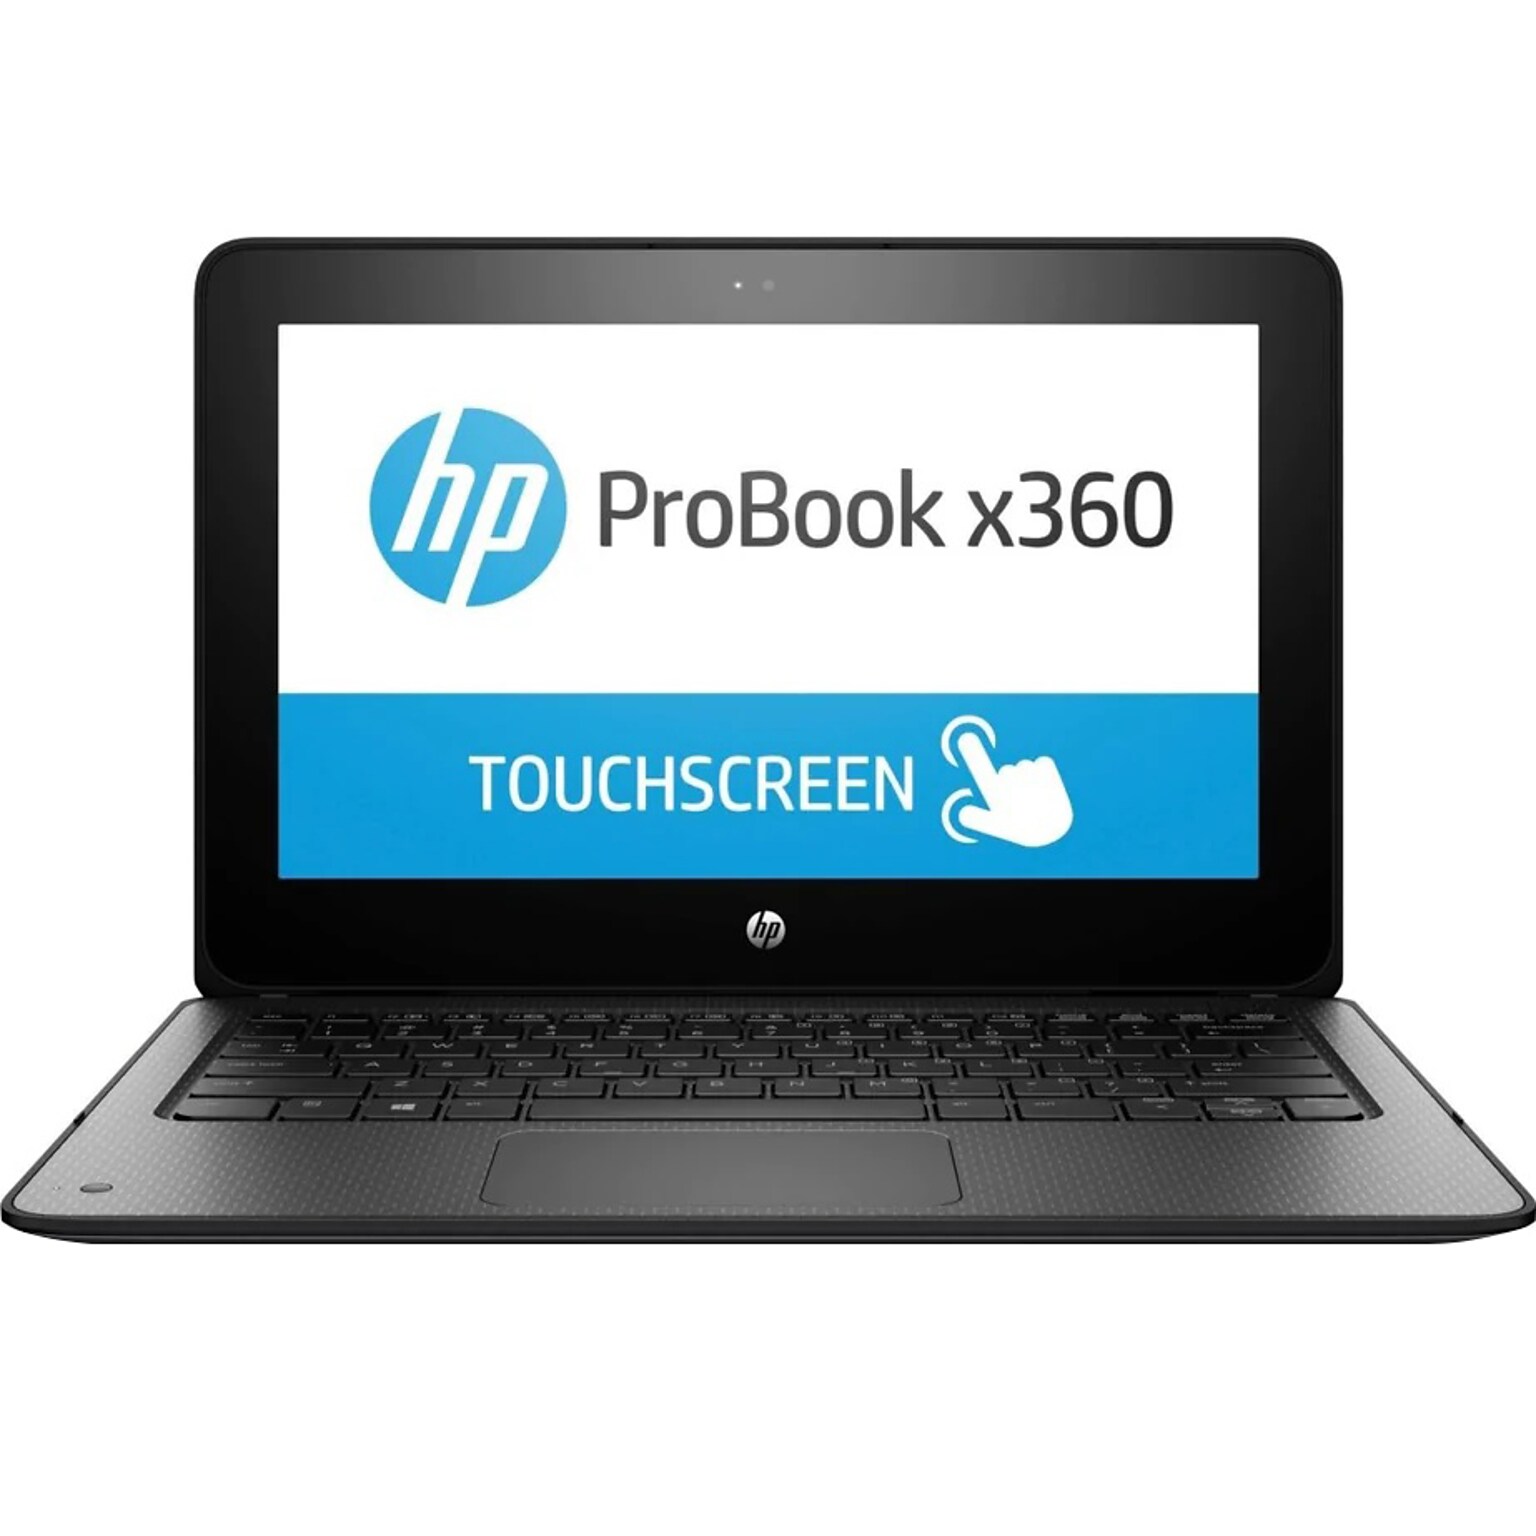 HP ProBook x360 11 G1 Education Edition 11.6 Refurbished Laptop, Intel Pentium, 8GB Memory, 128GB SSD, Windows 10 Pro